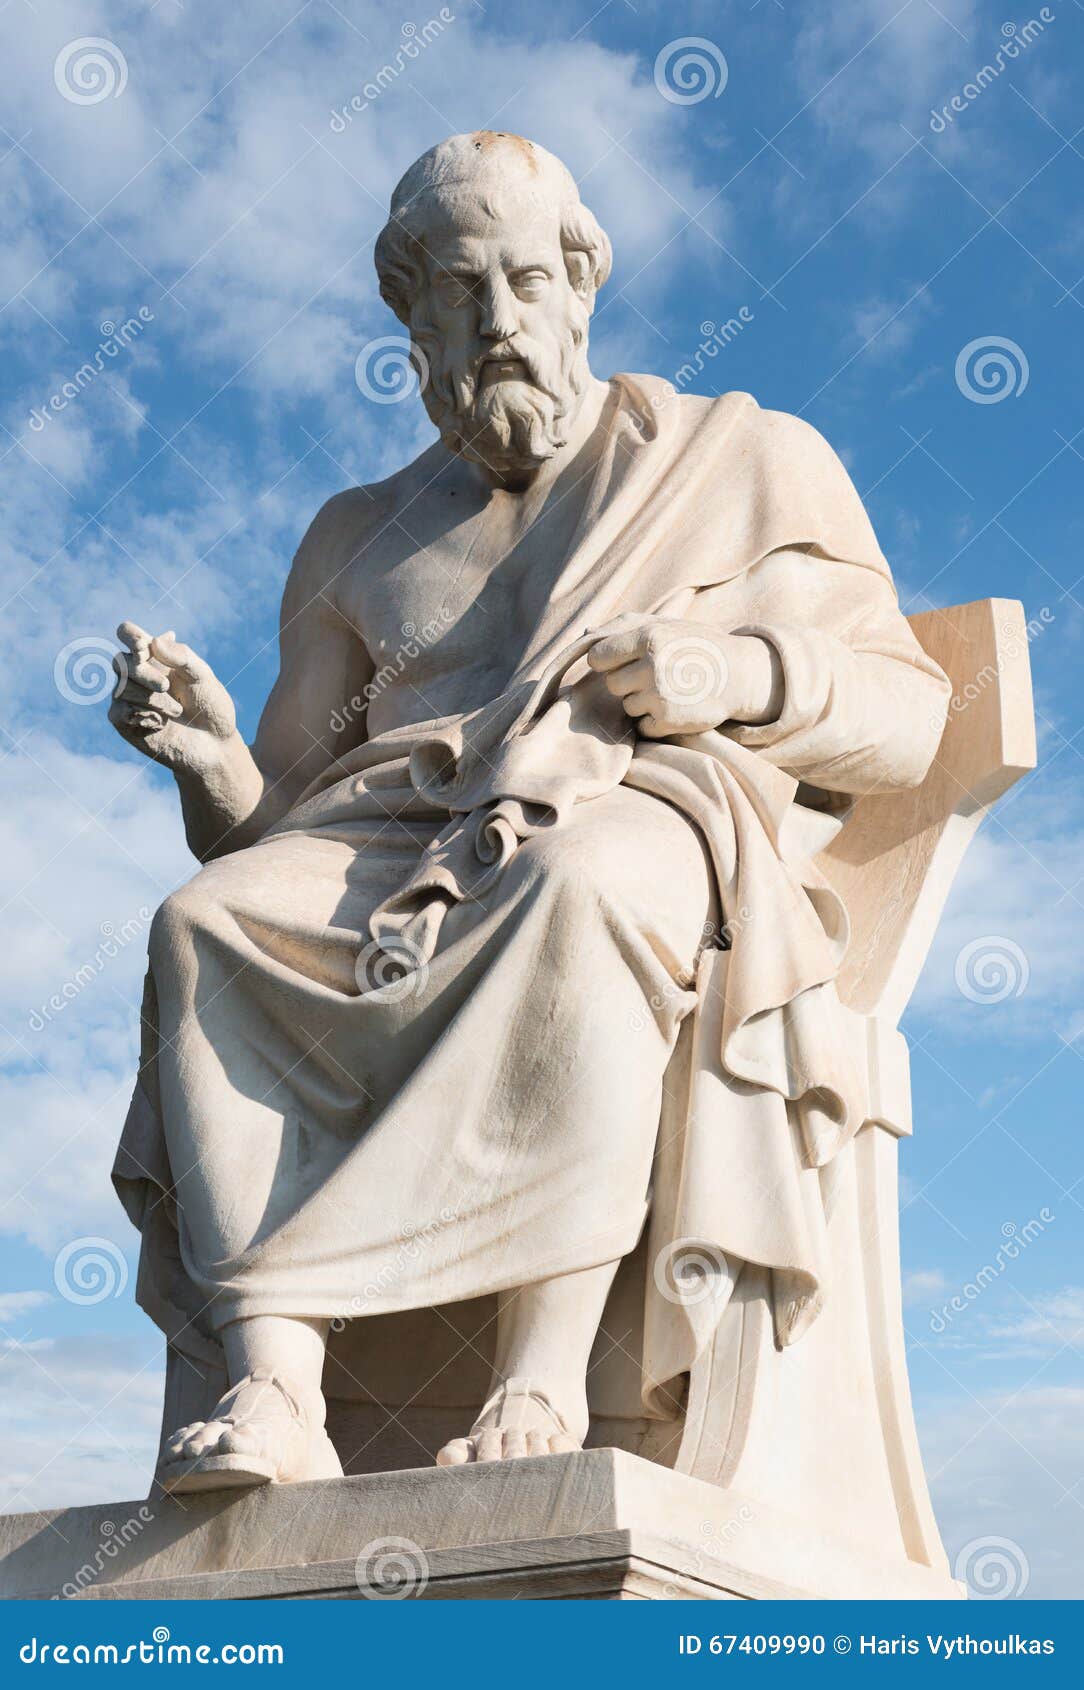 plato,ancient greek philosopher